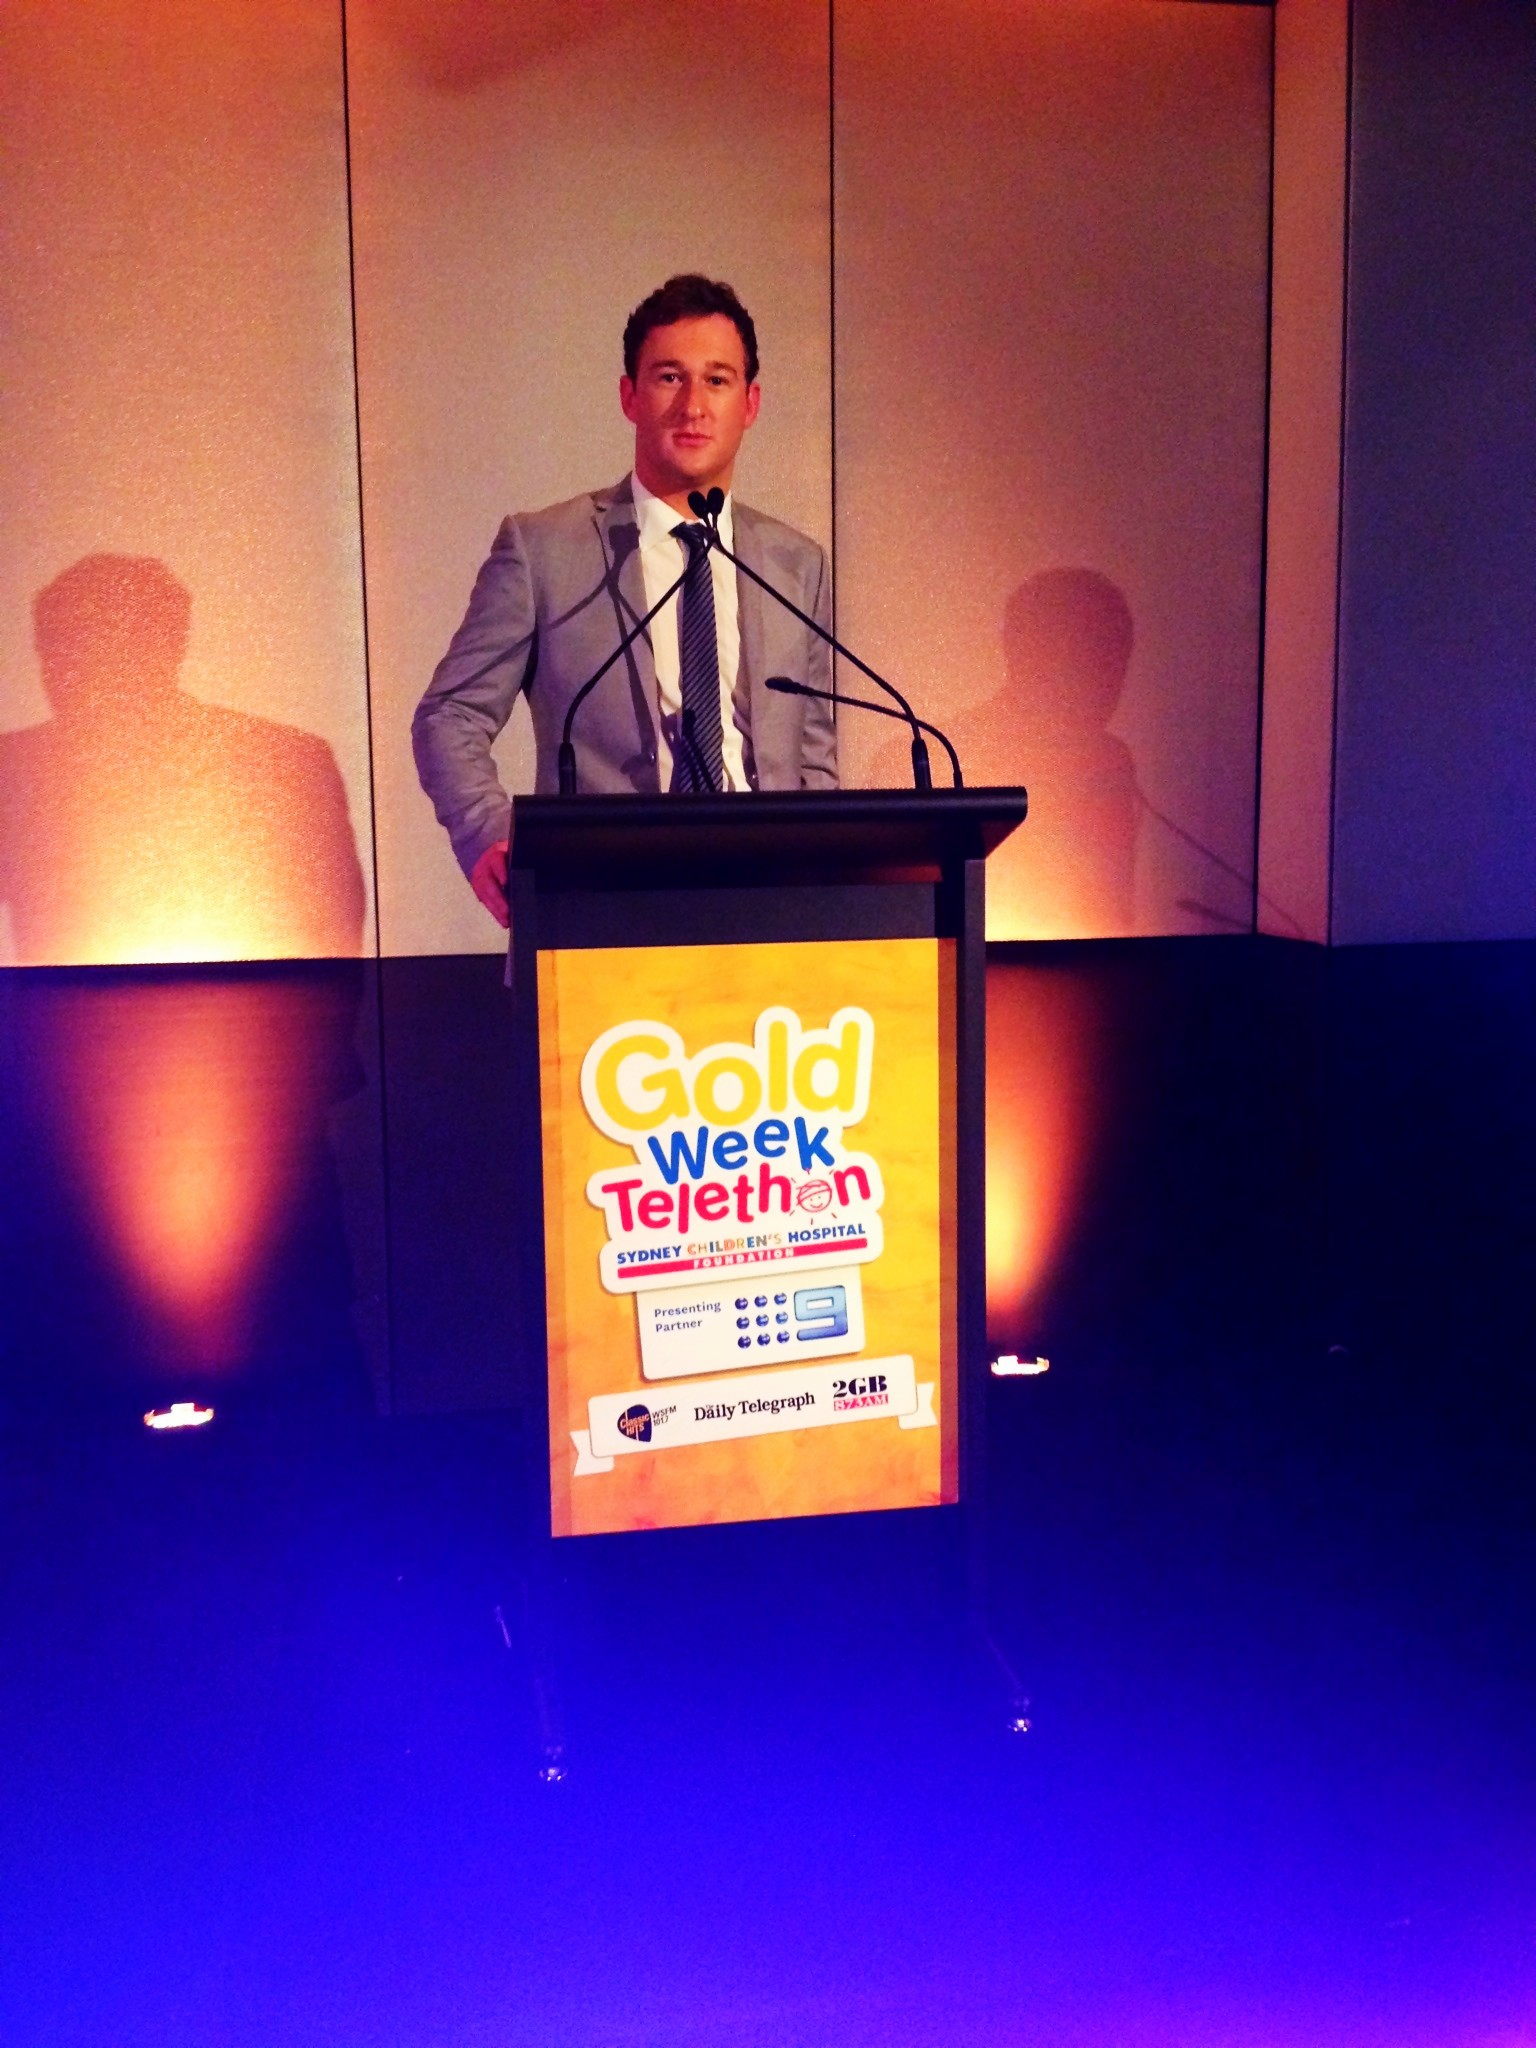 James Pratt Auctioneer at the 2012 Sydney Children's Channel Nine Gold week event.